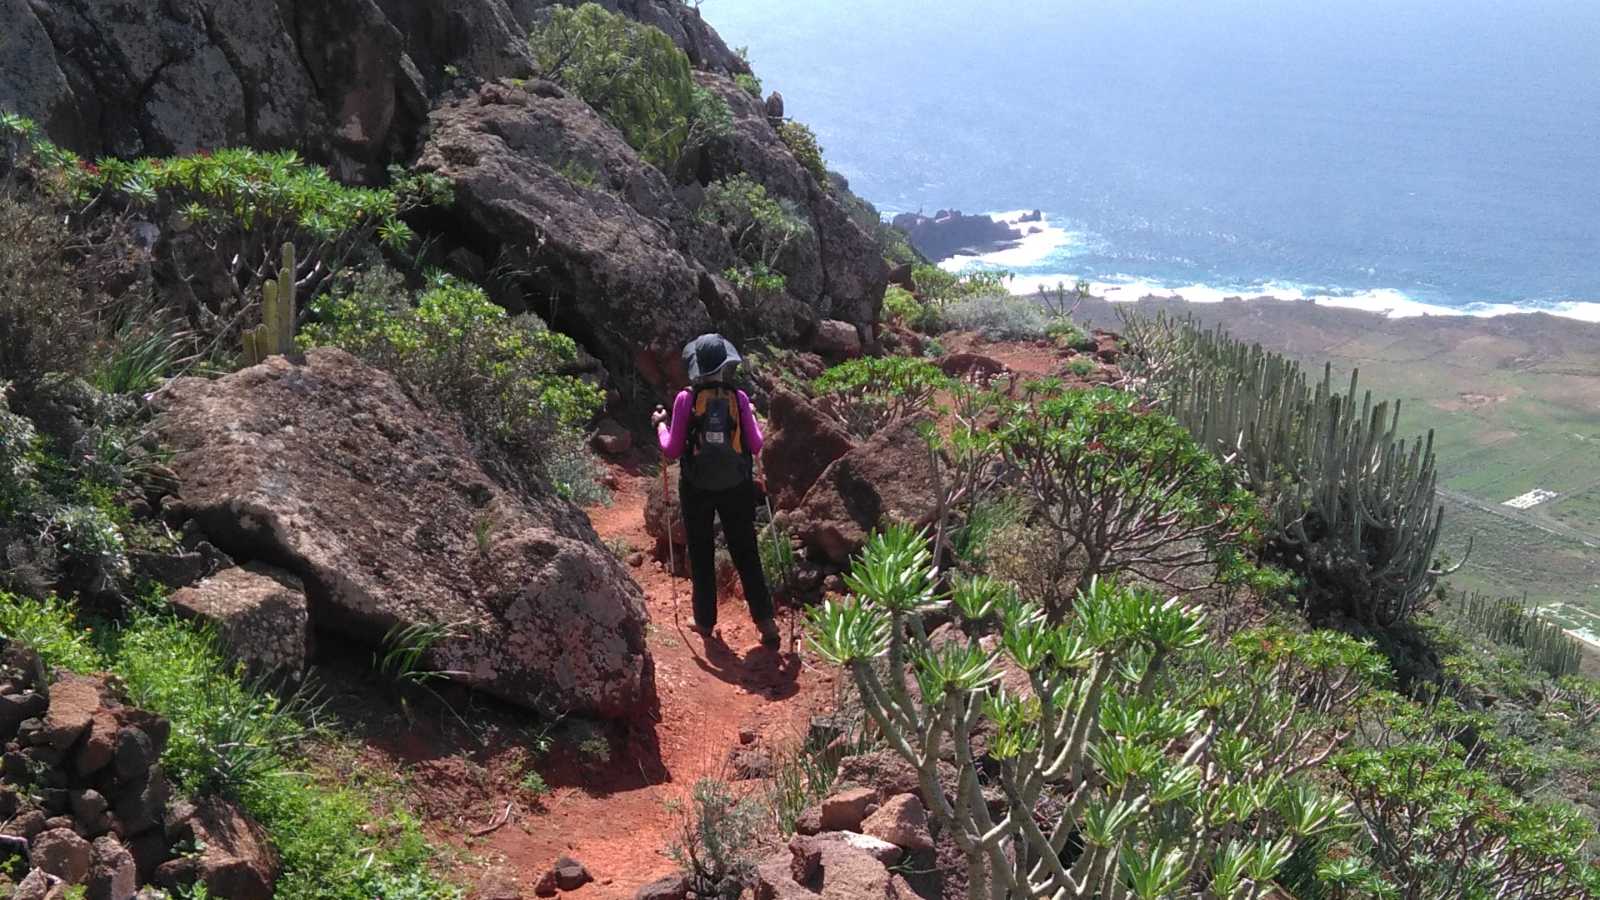 Descent on the hiking trail PR TF-51 to Punta de Teno